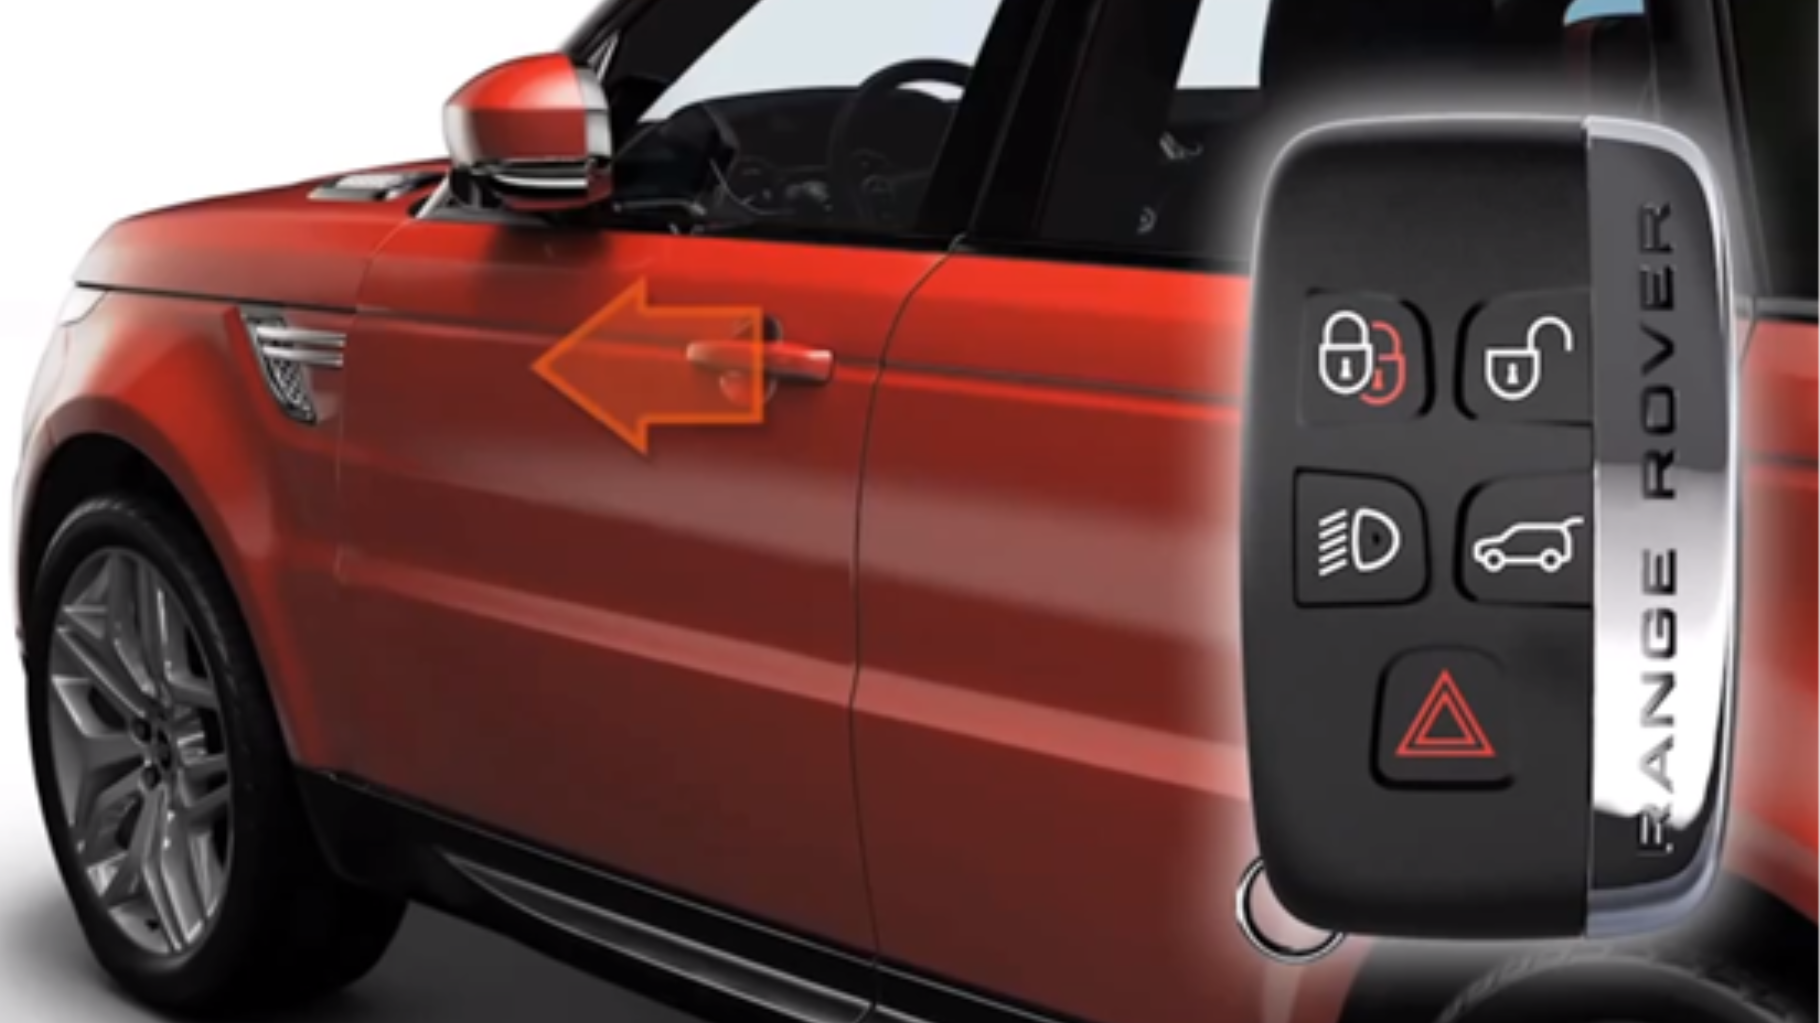 Range Rover Sport Smart Key